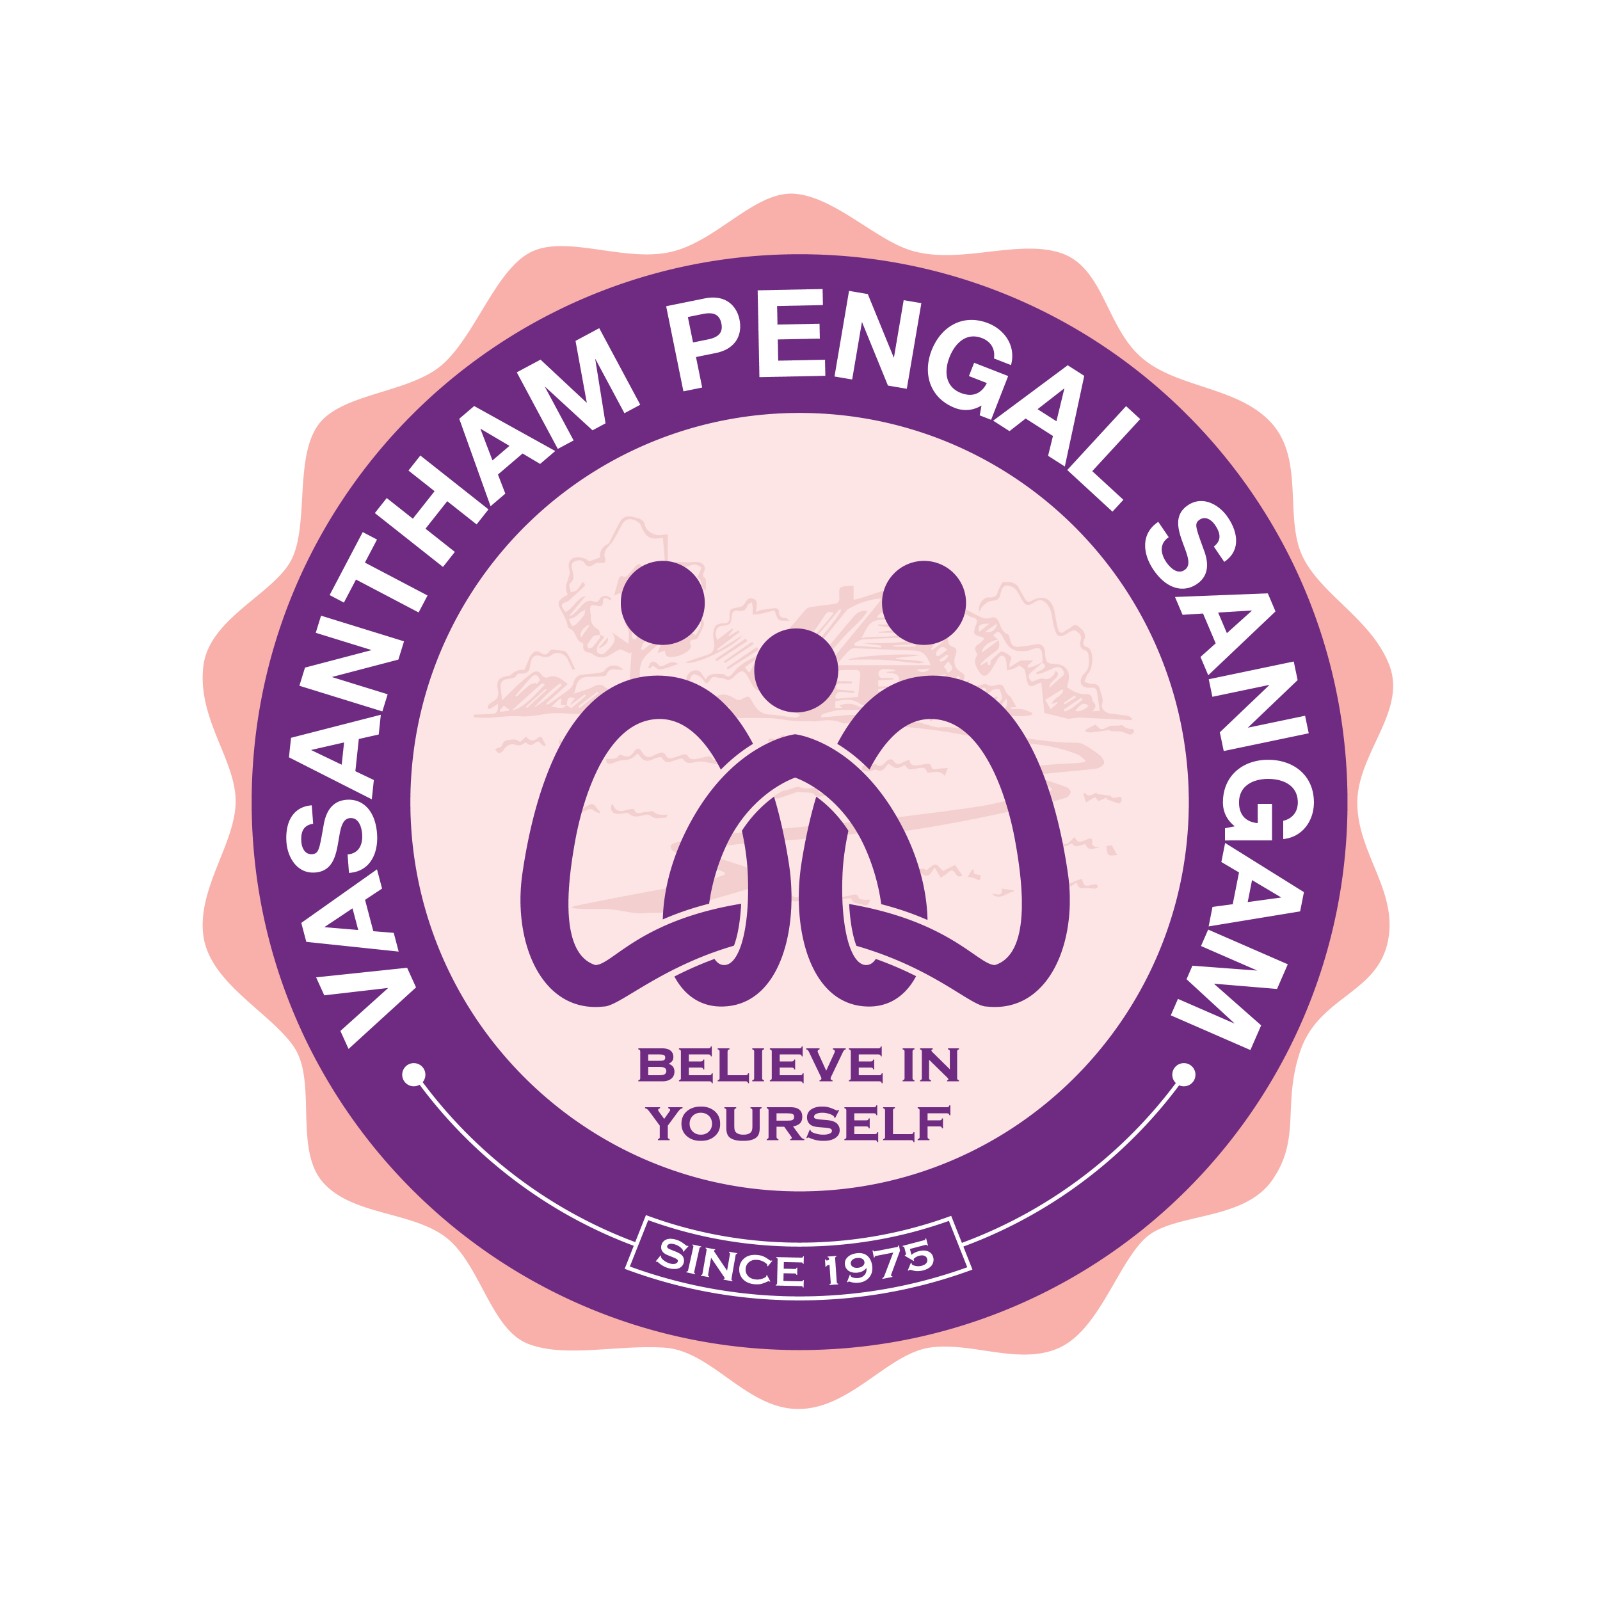 Vasantham Pengal Sangam logo